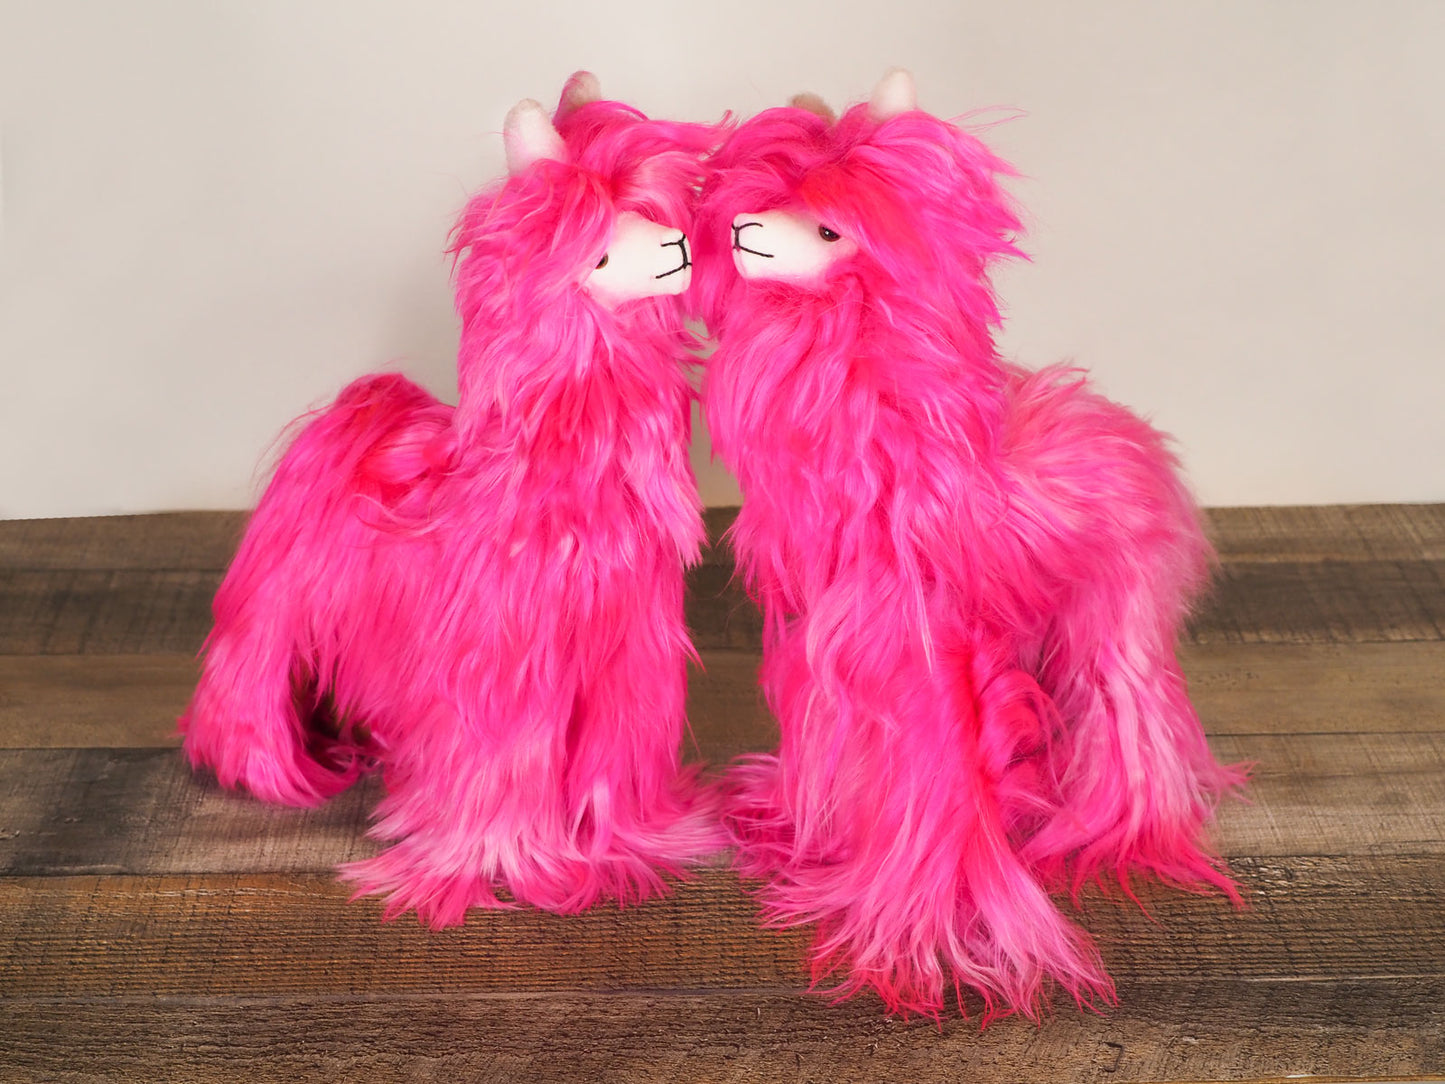 2 Hot Pink Alpaca Stuffed Animals together